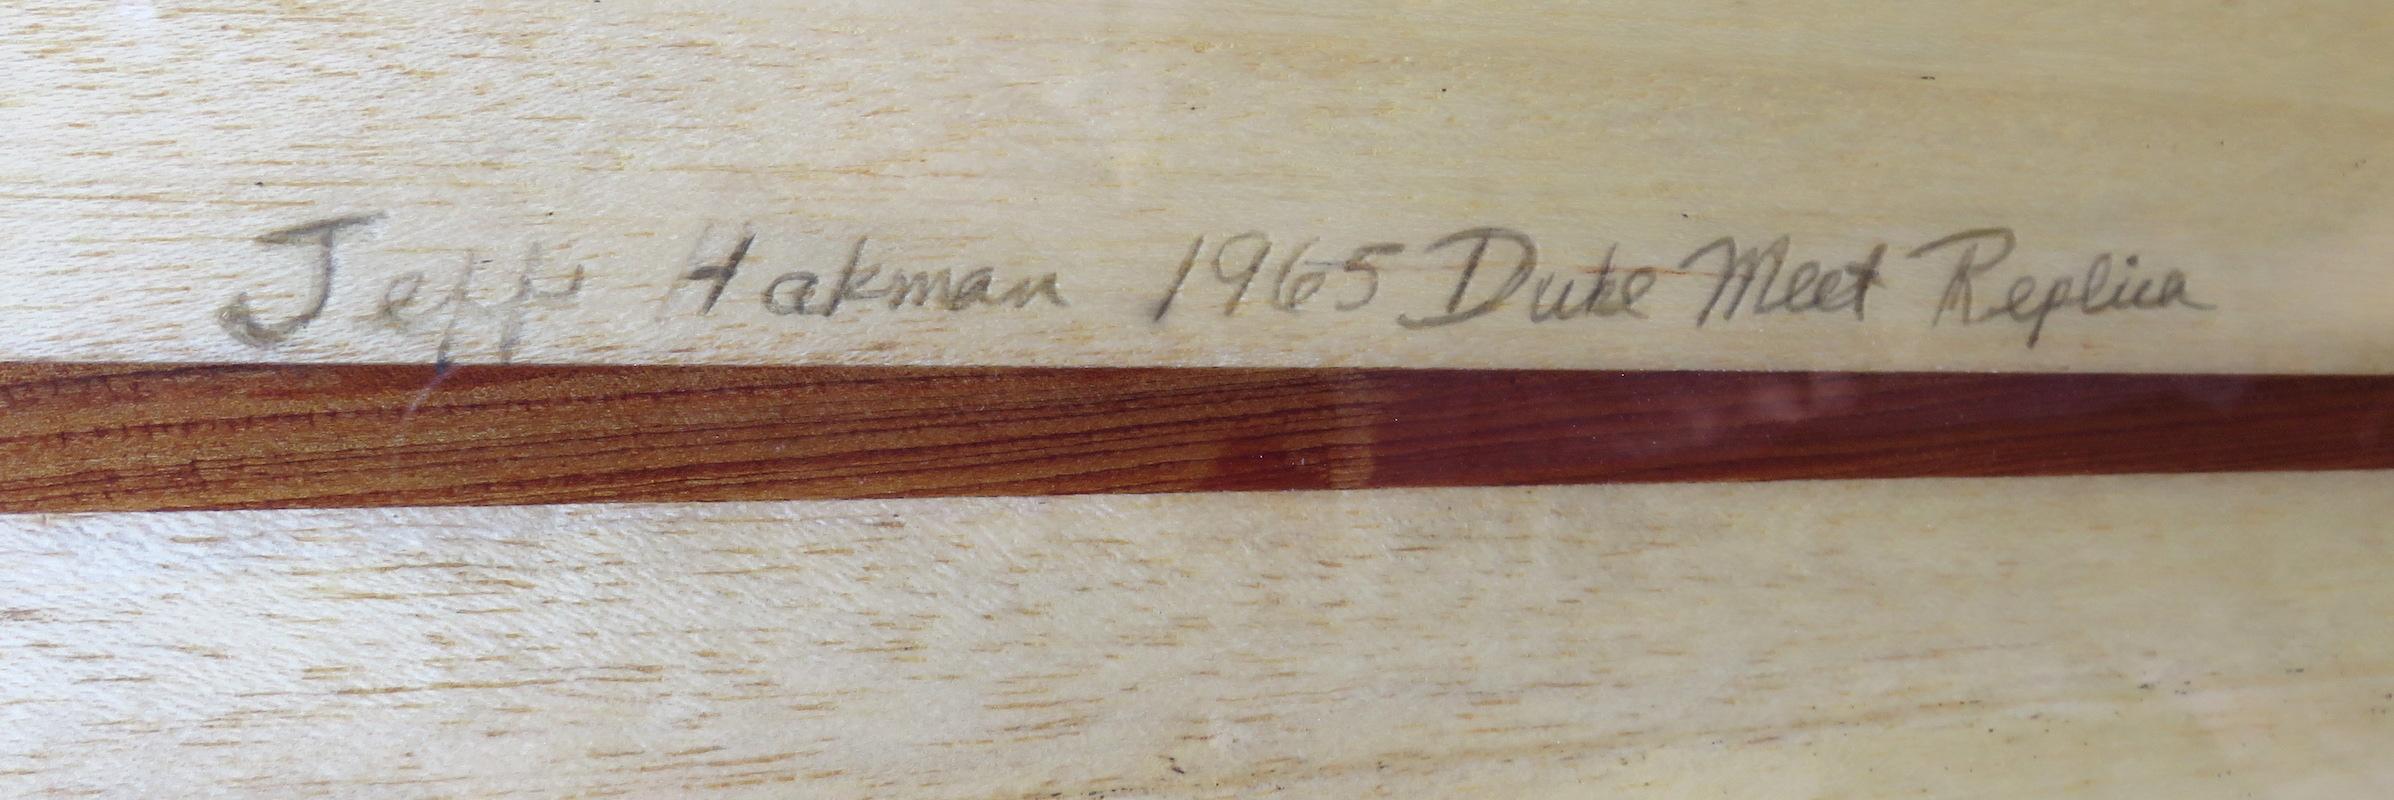 Hobie Jeff Hakman 1965 Duke Kahanamoku Wooden Surfboard by Dick Brewer 1